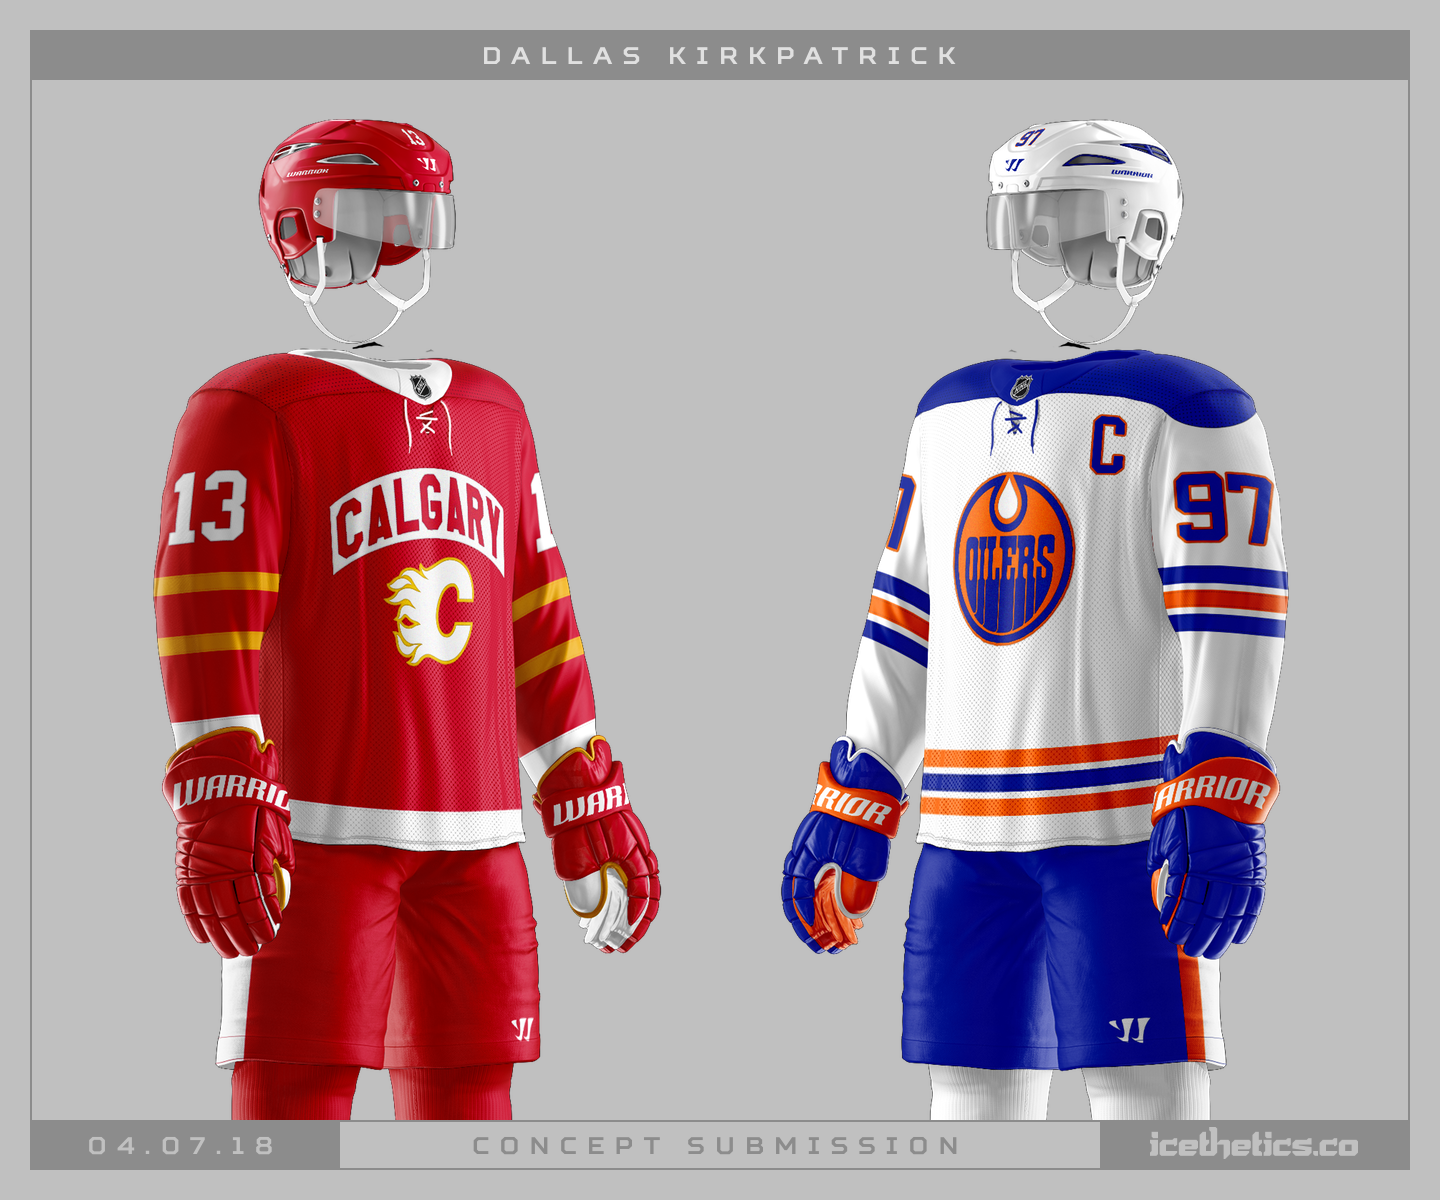 Oilers Jersey Concepts from CD24_Design : r/EdmontonOilers